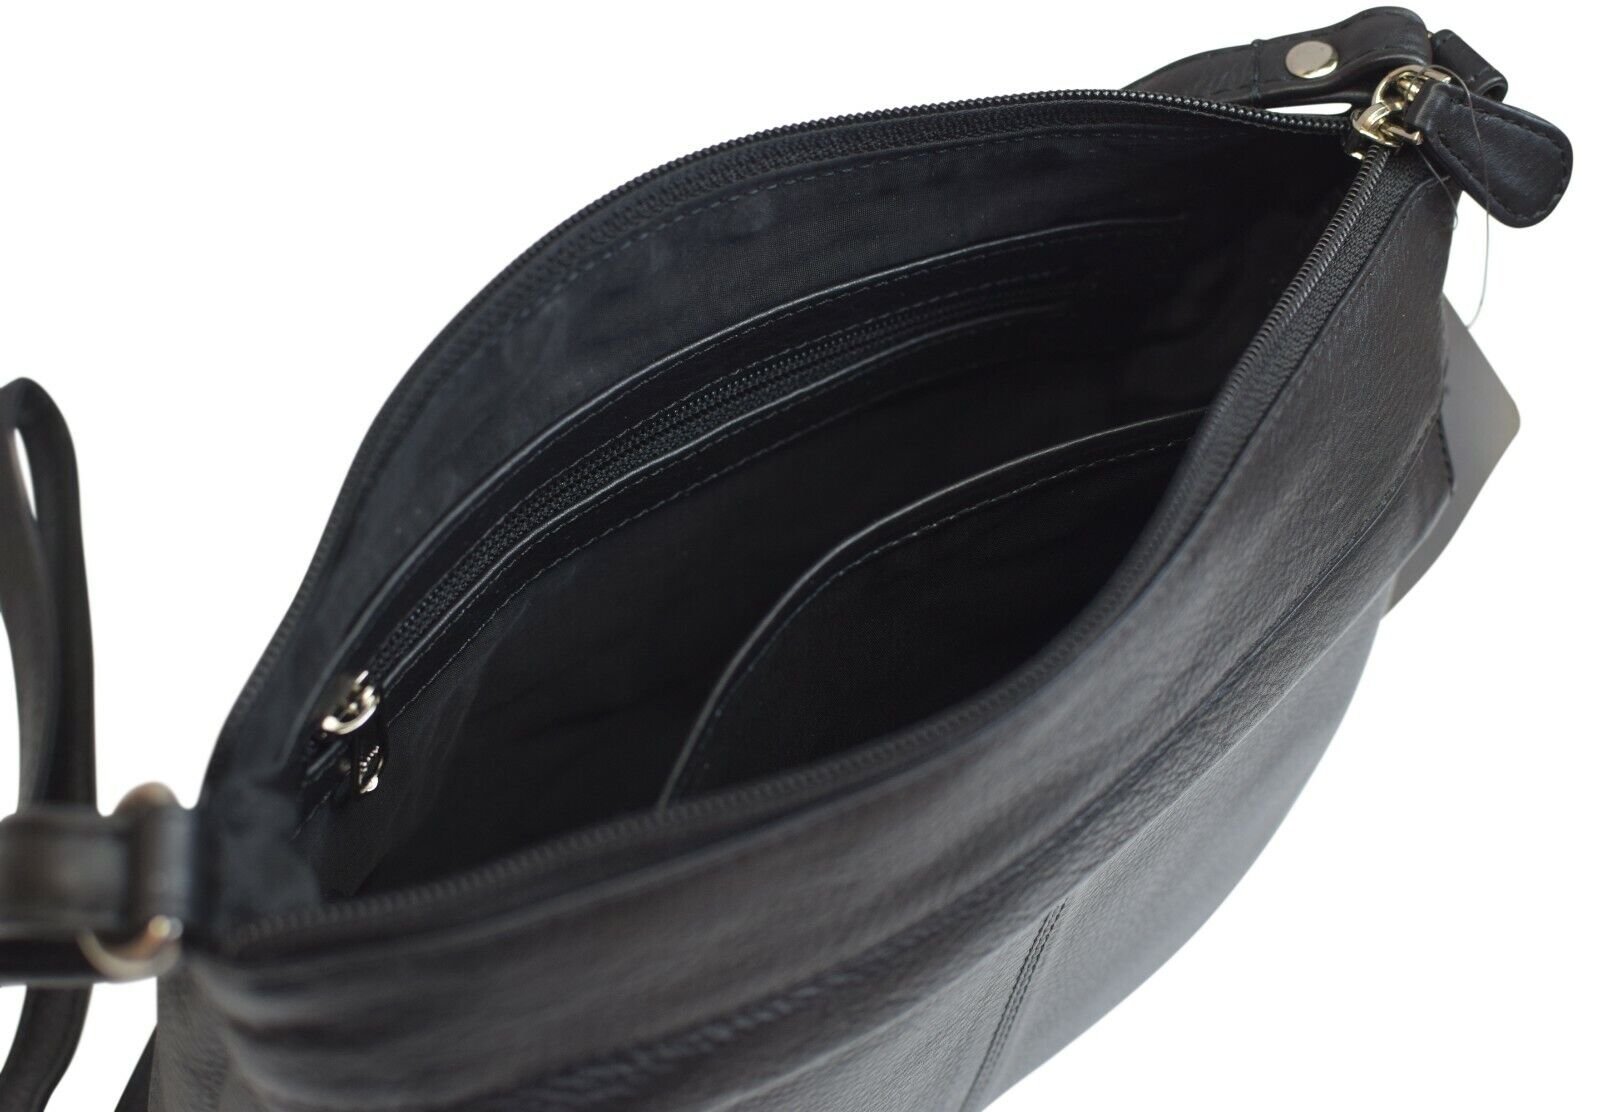 Croft & Barrow Black Leather Shoulder Hand Bag Purse + wallet | eBay